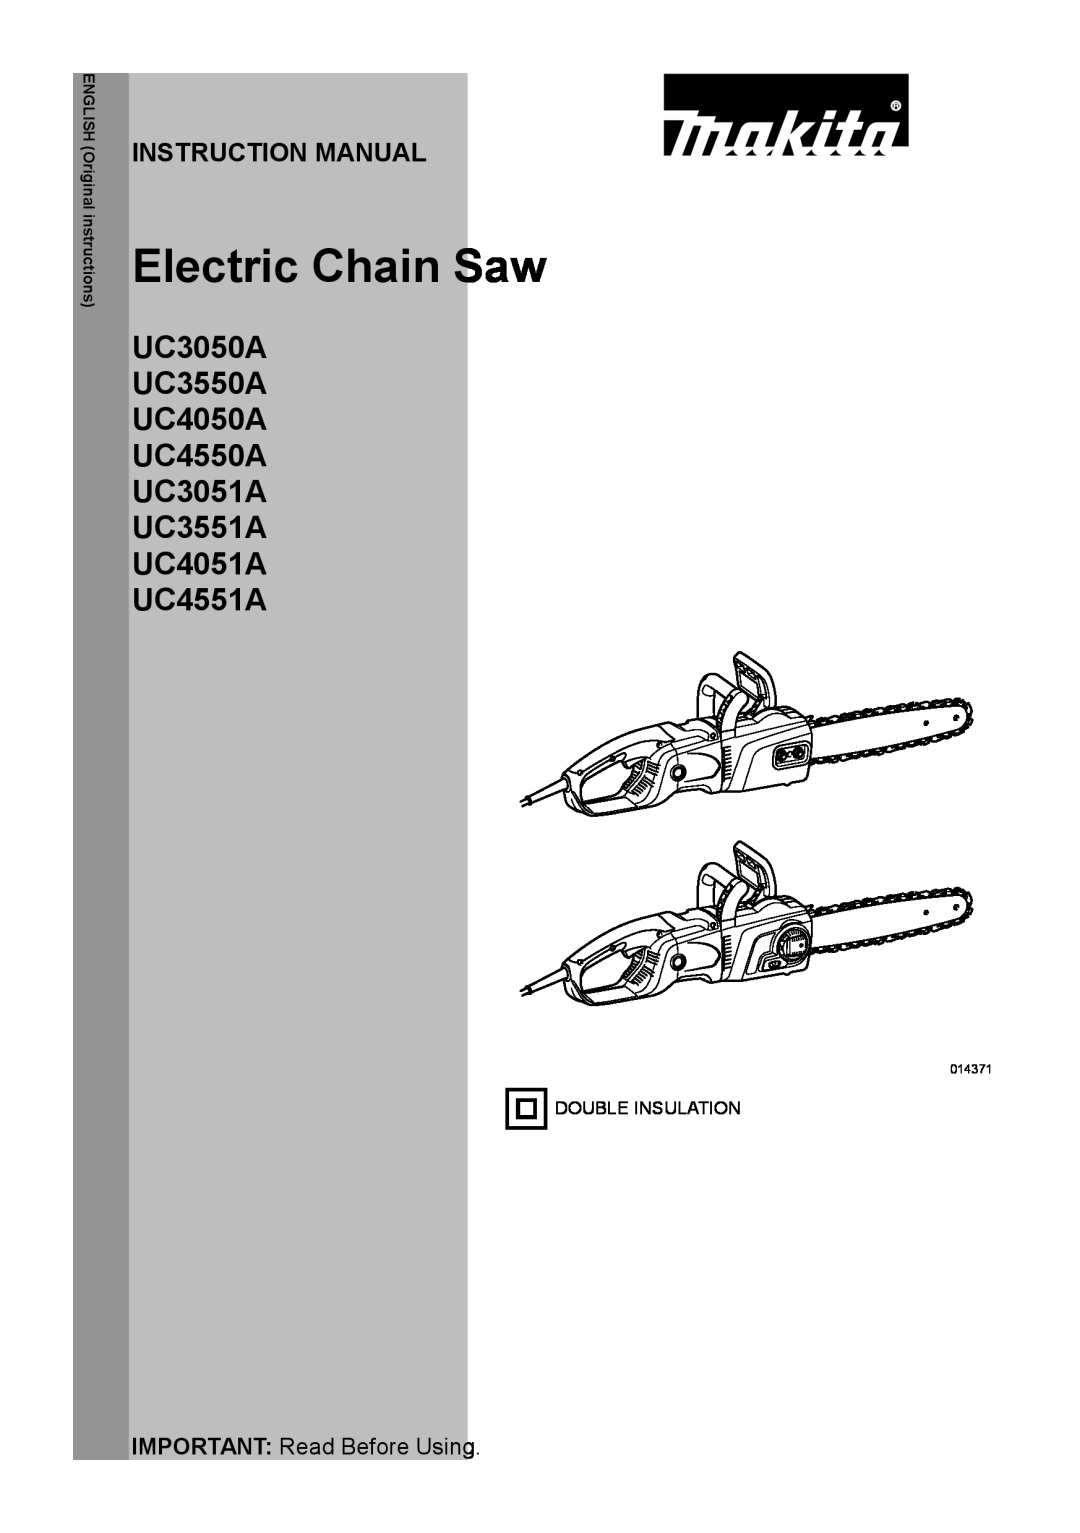 Makita instruction manual Electric Chain Saw, UC3050A UC3550A UC4050A UC4550A UC3051A UC3551A UC4051A UC4551A, 014371 